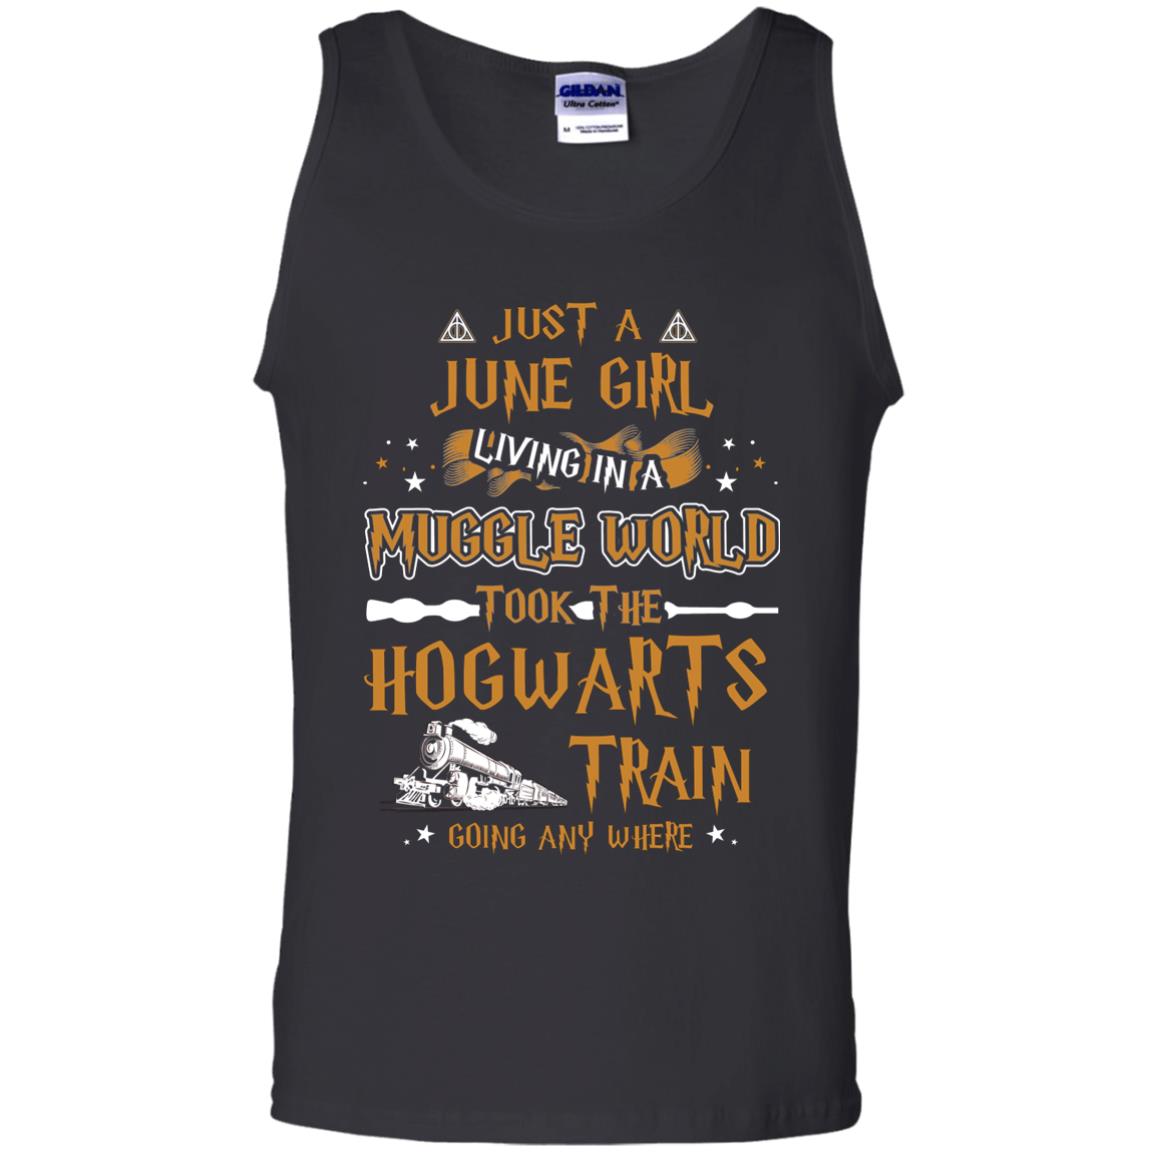 Just A June Girl Living In A Muggle World Took The Hogwarts Train Going Any WhereG220 Gildan 100% Cotton Tank Top